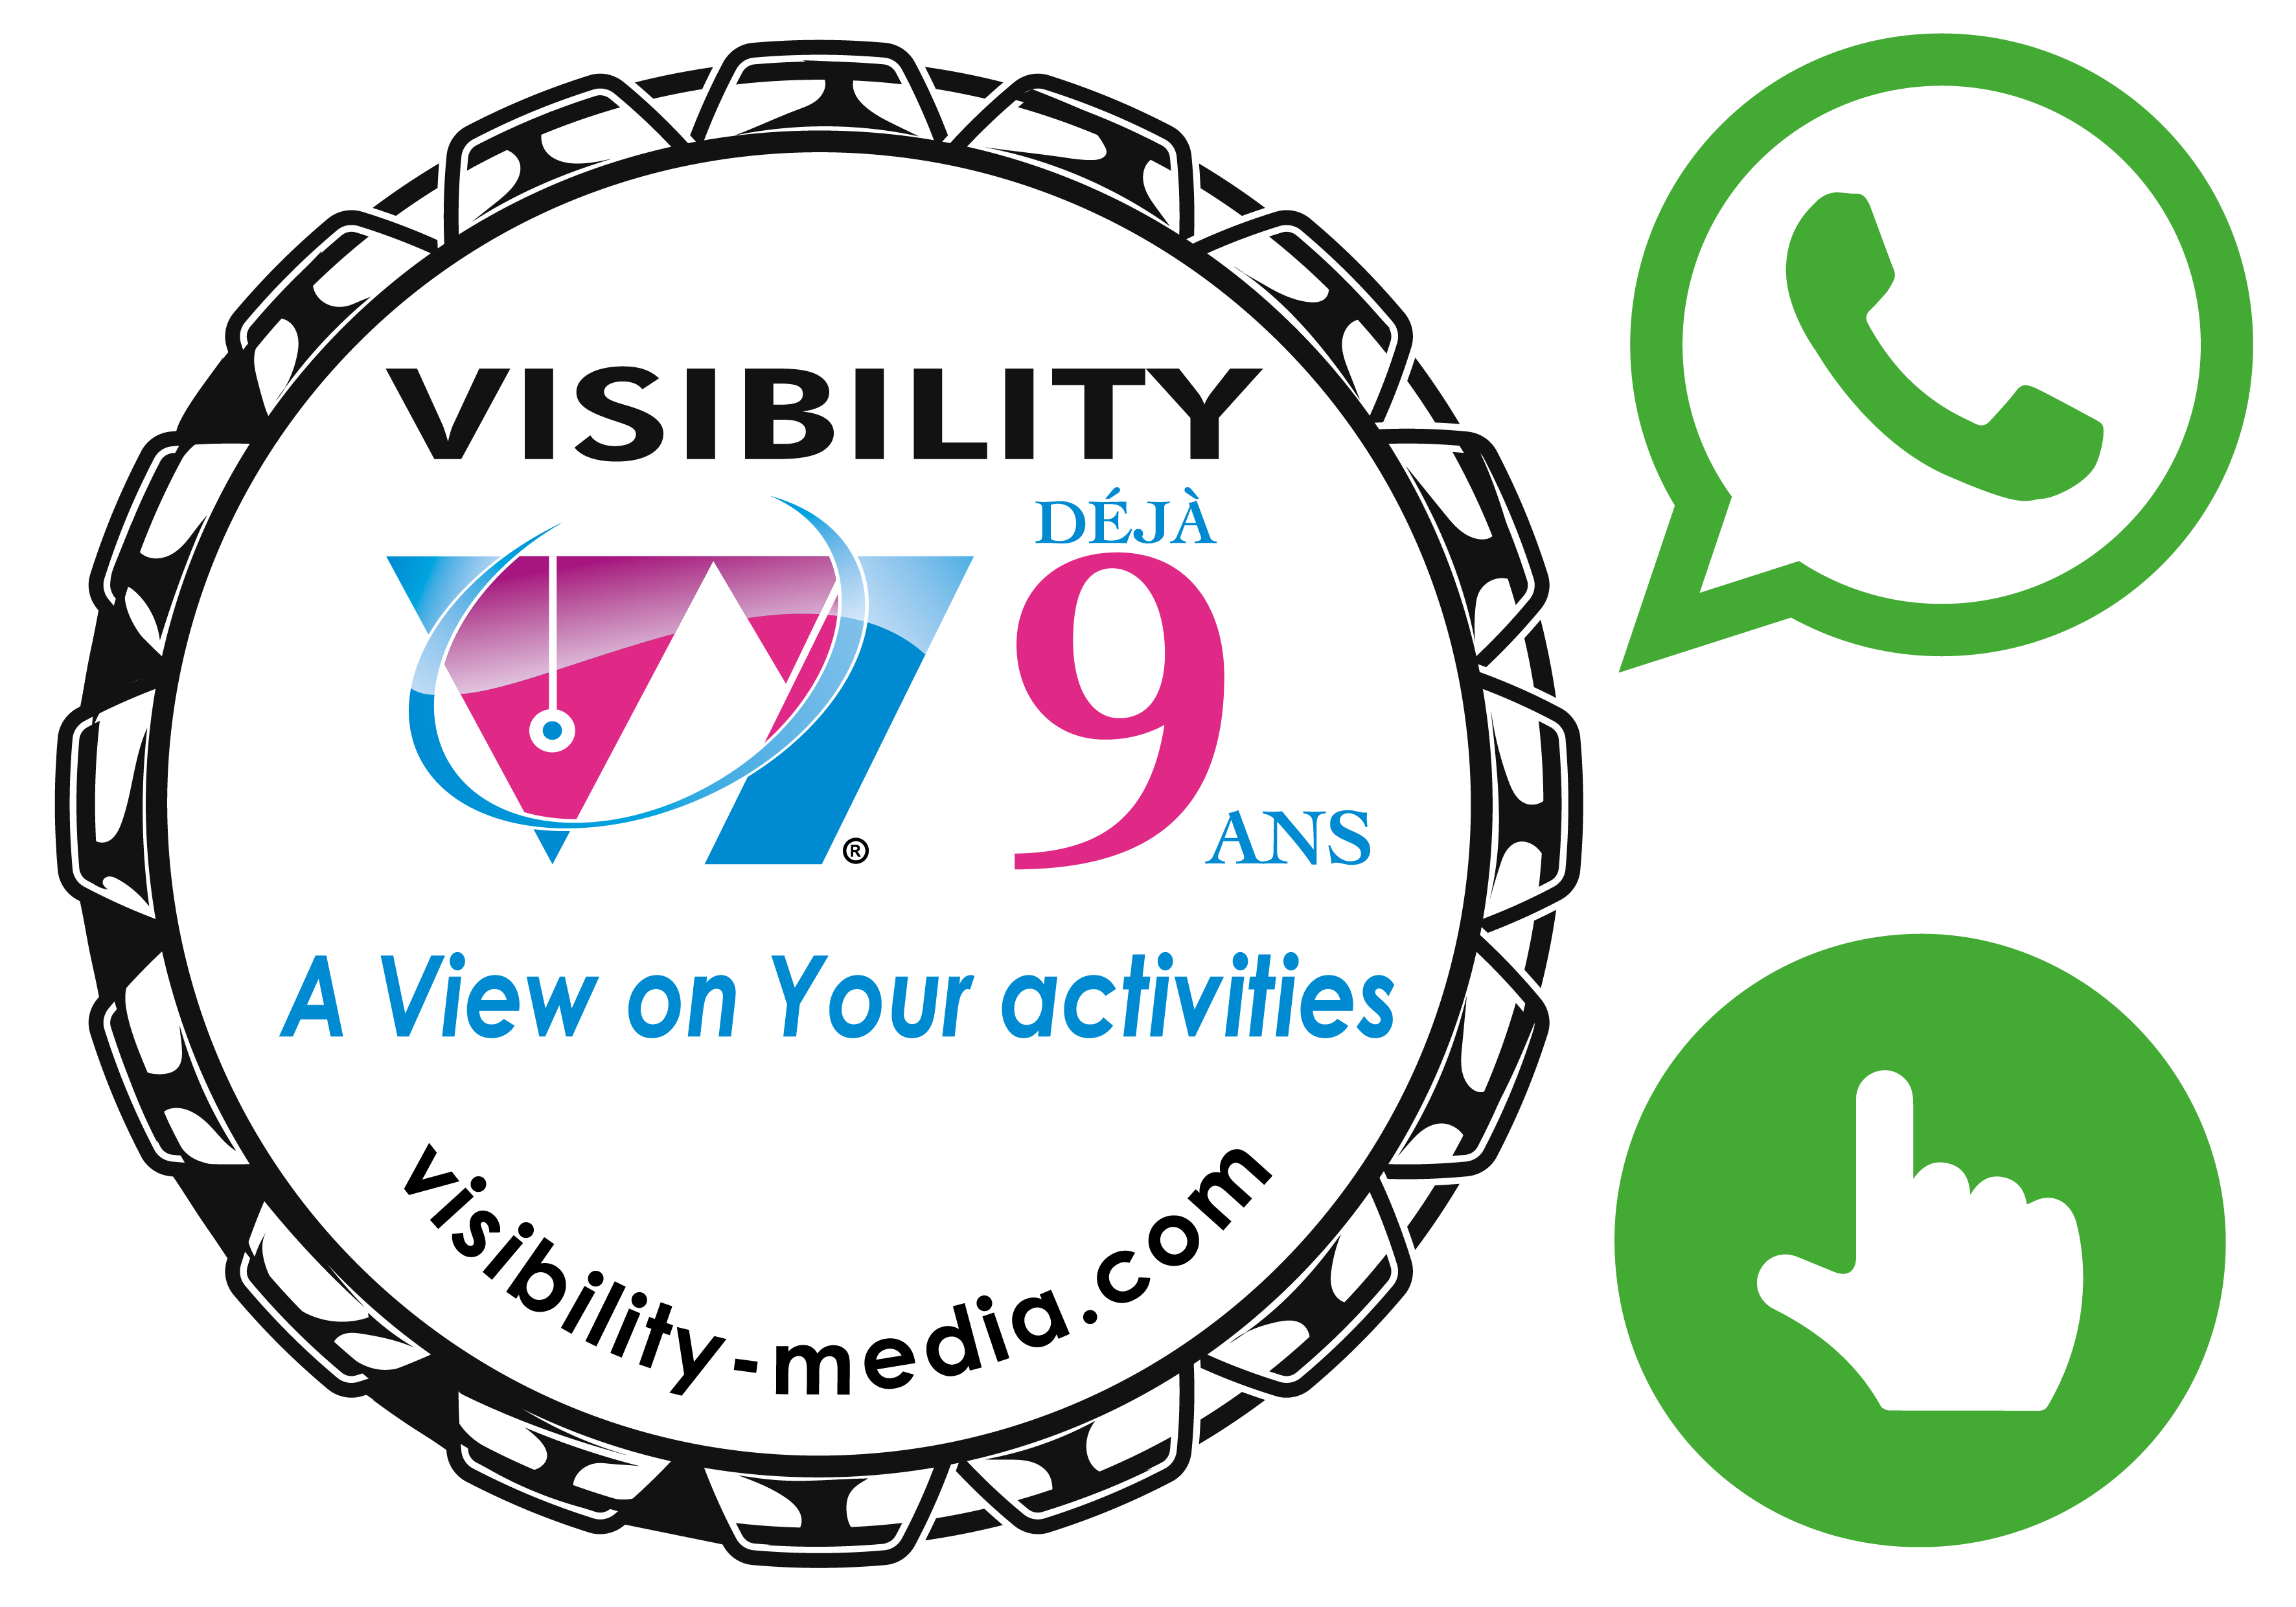 Visibility-media